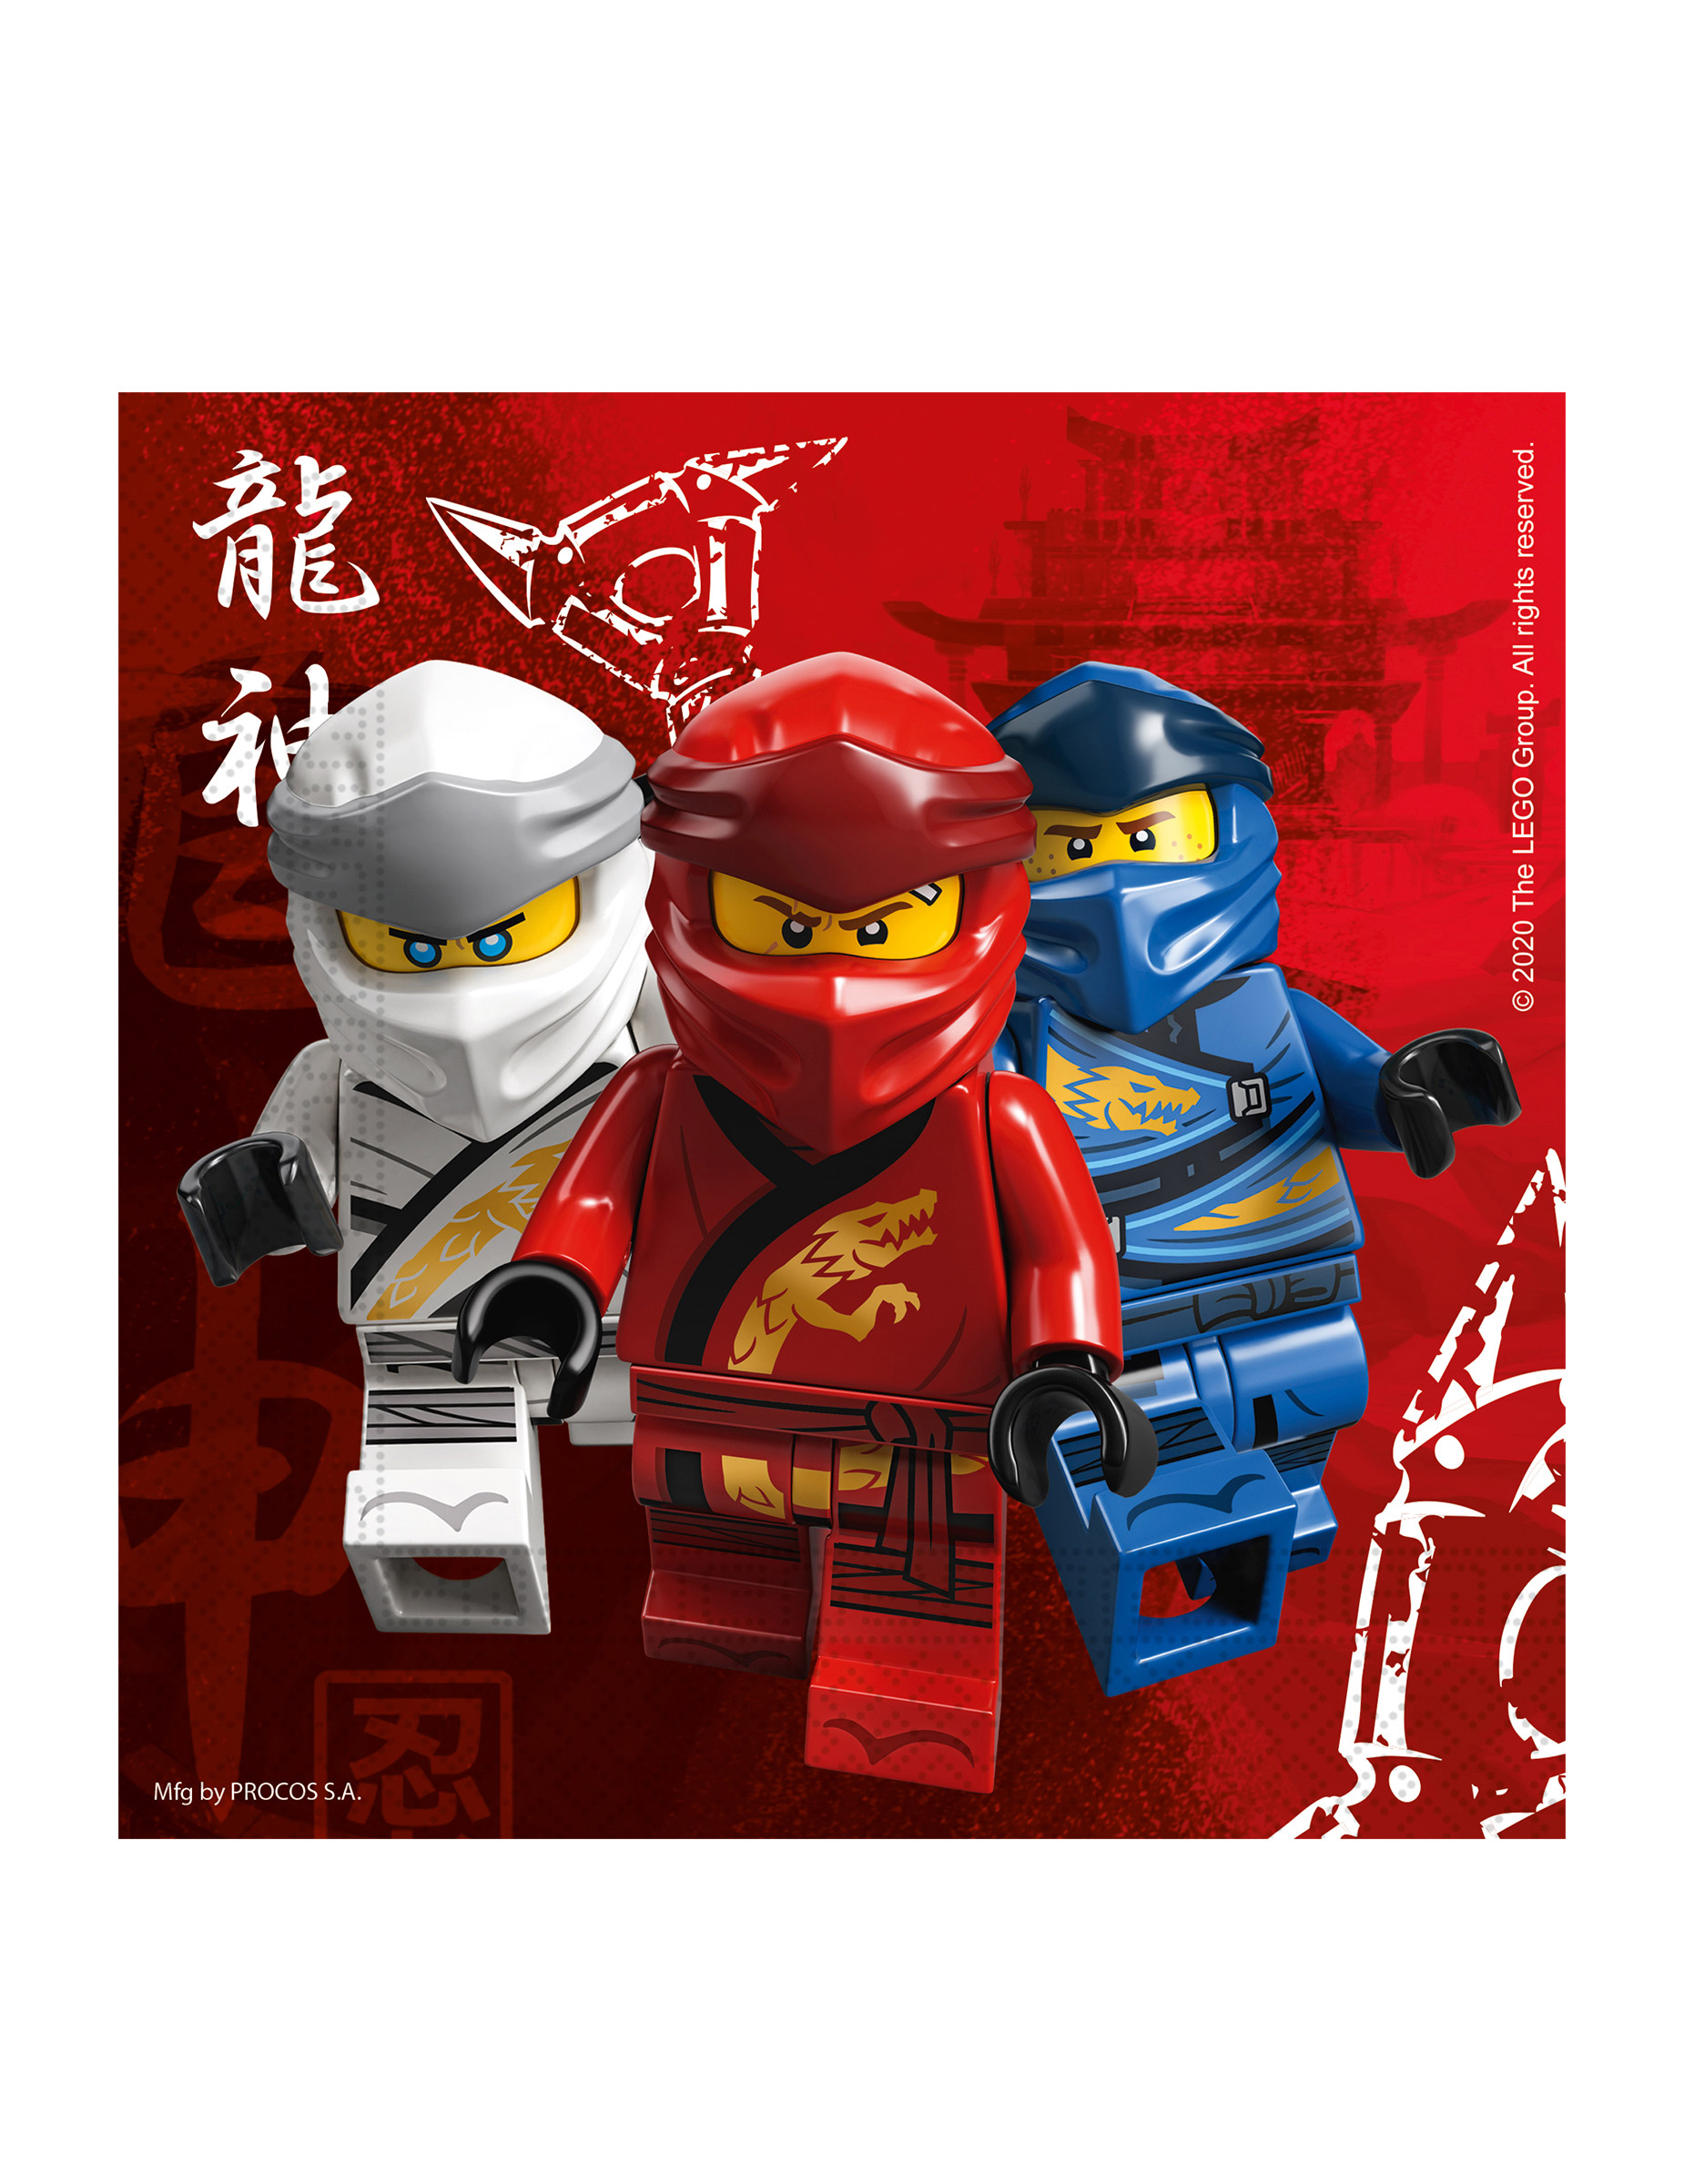 Lego Ninjago-Papierservietten FSC zertifiziert 20 Stück bunt 33 x 33 cm von KARNEVAL-MEGASTORE